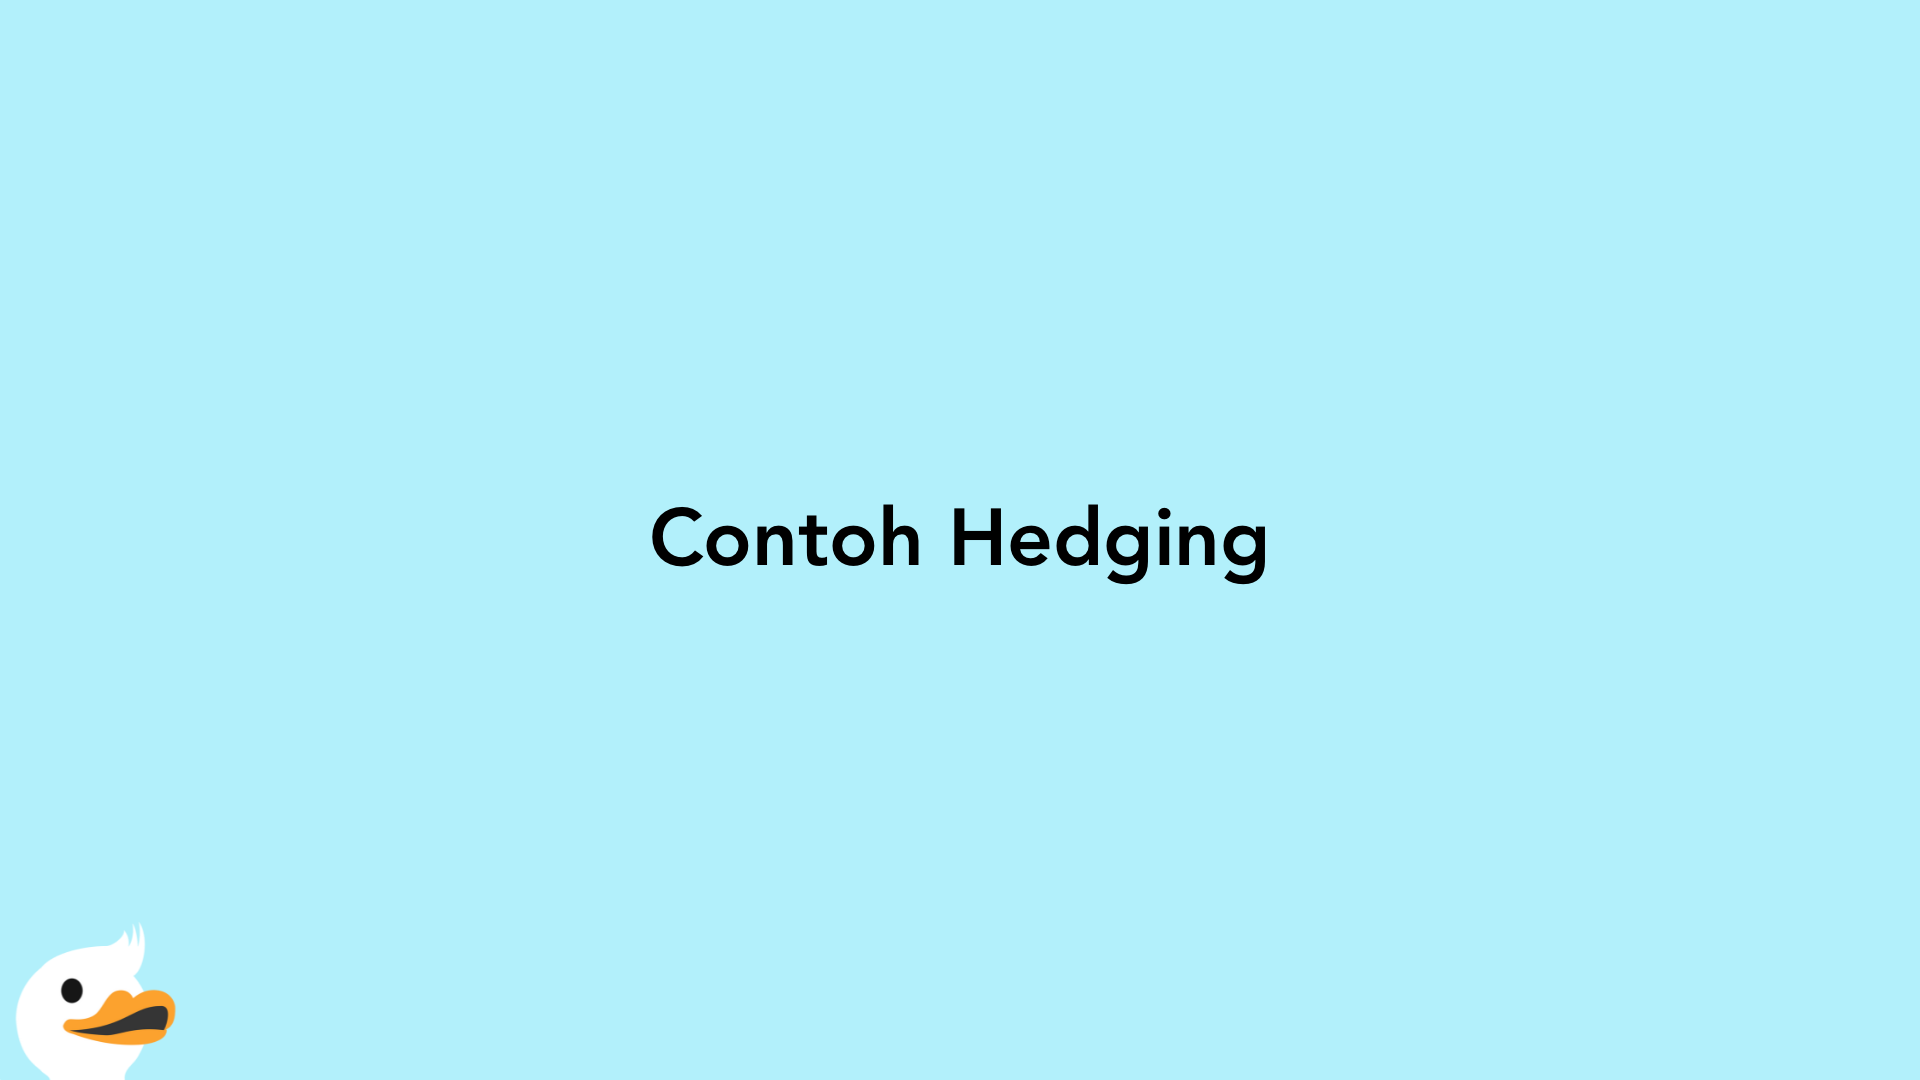 Contoh Hedging